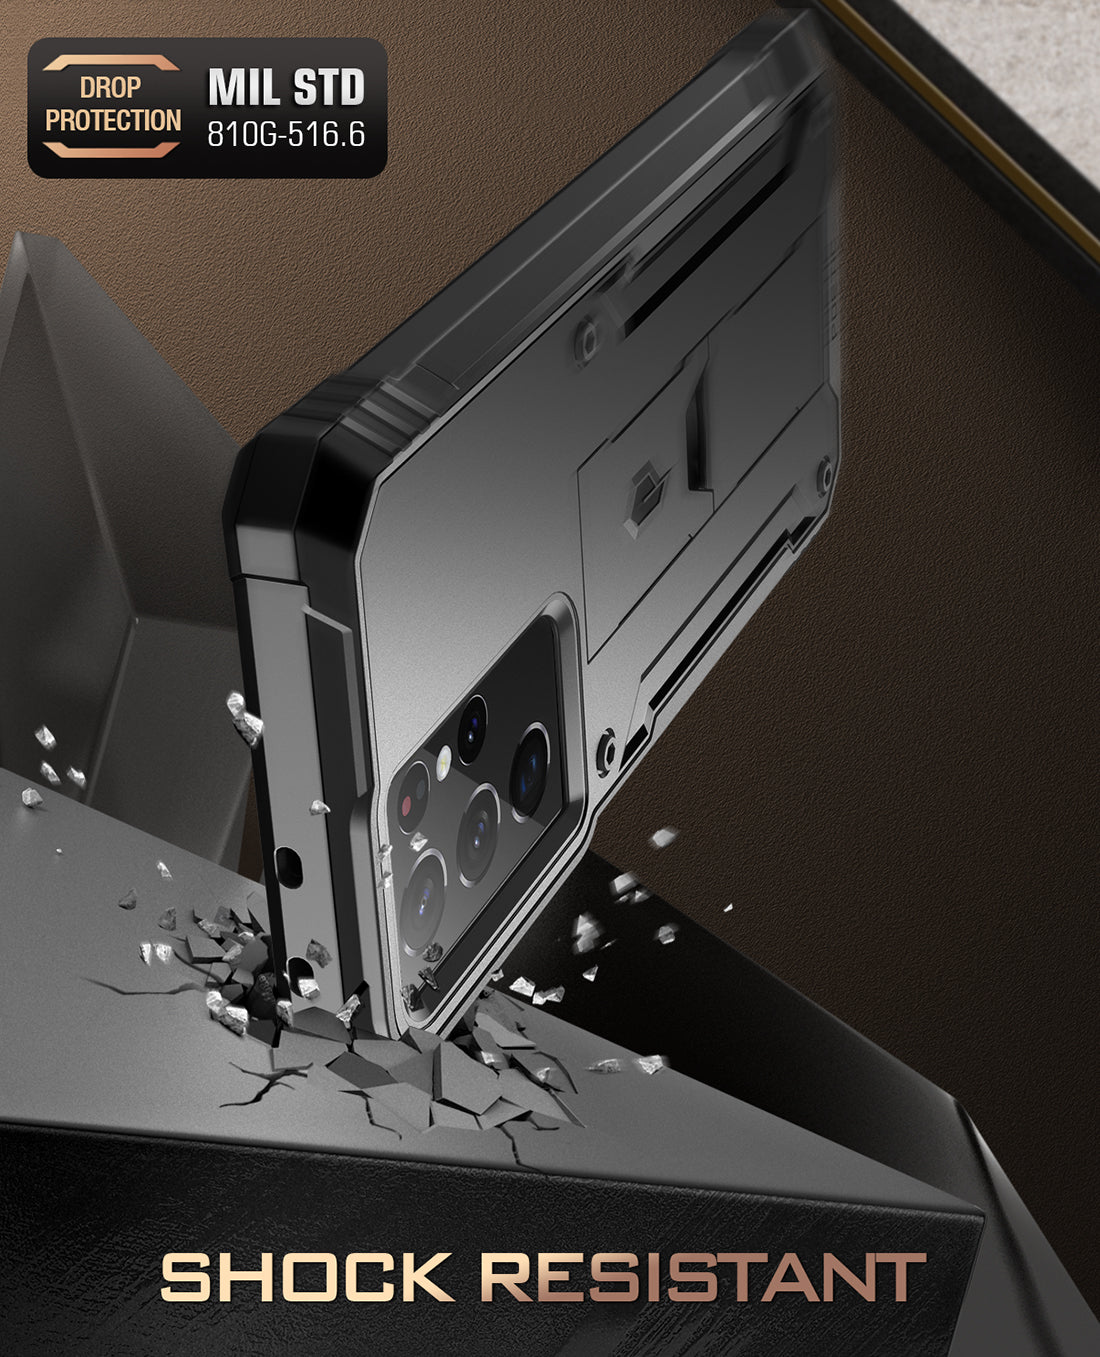 Samsung Galaxy S21 Ultra Case